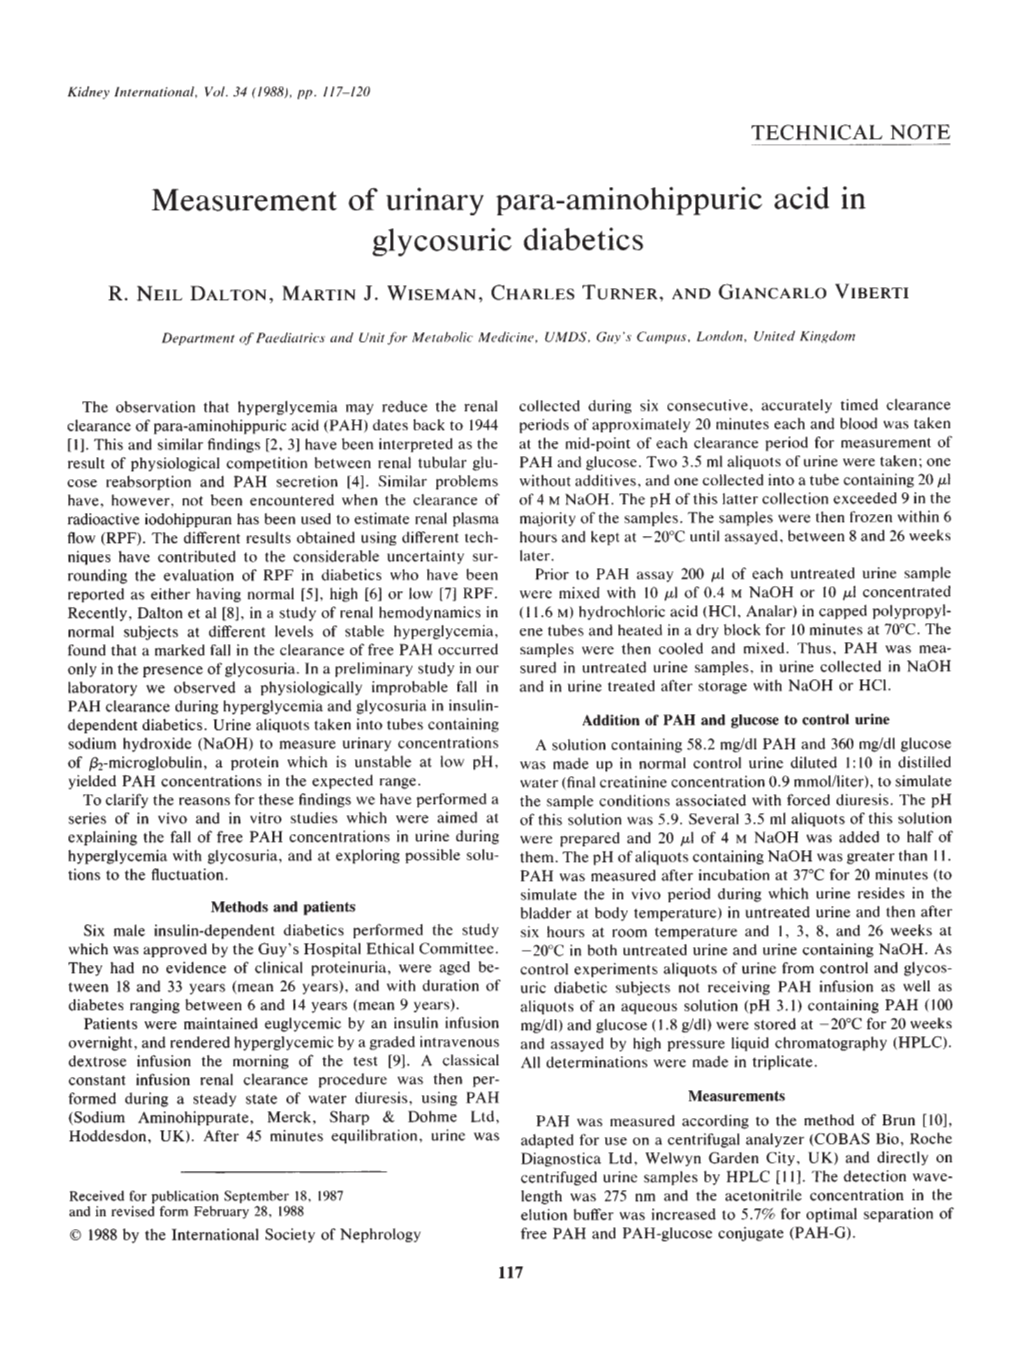 Measurement of Urinary Para-Aminohippuric Acid in Glycosuric Diabetics